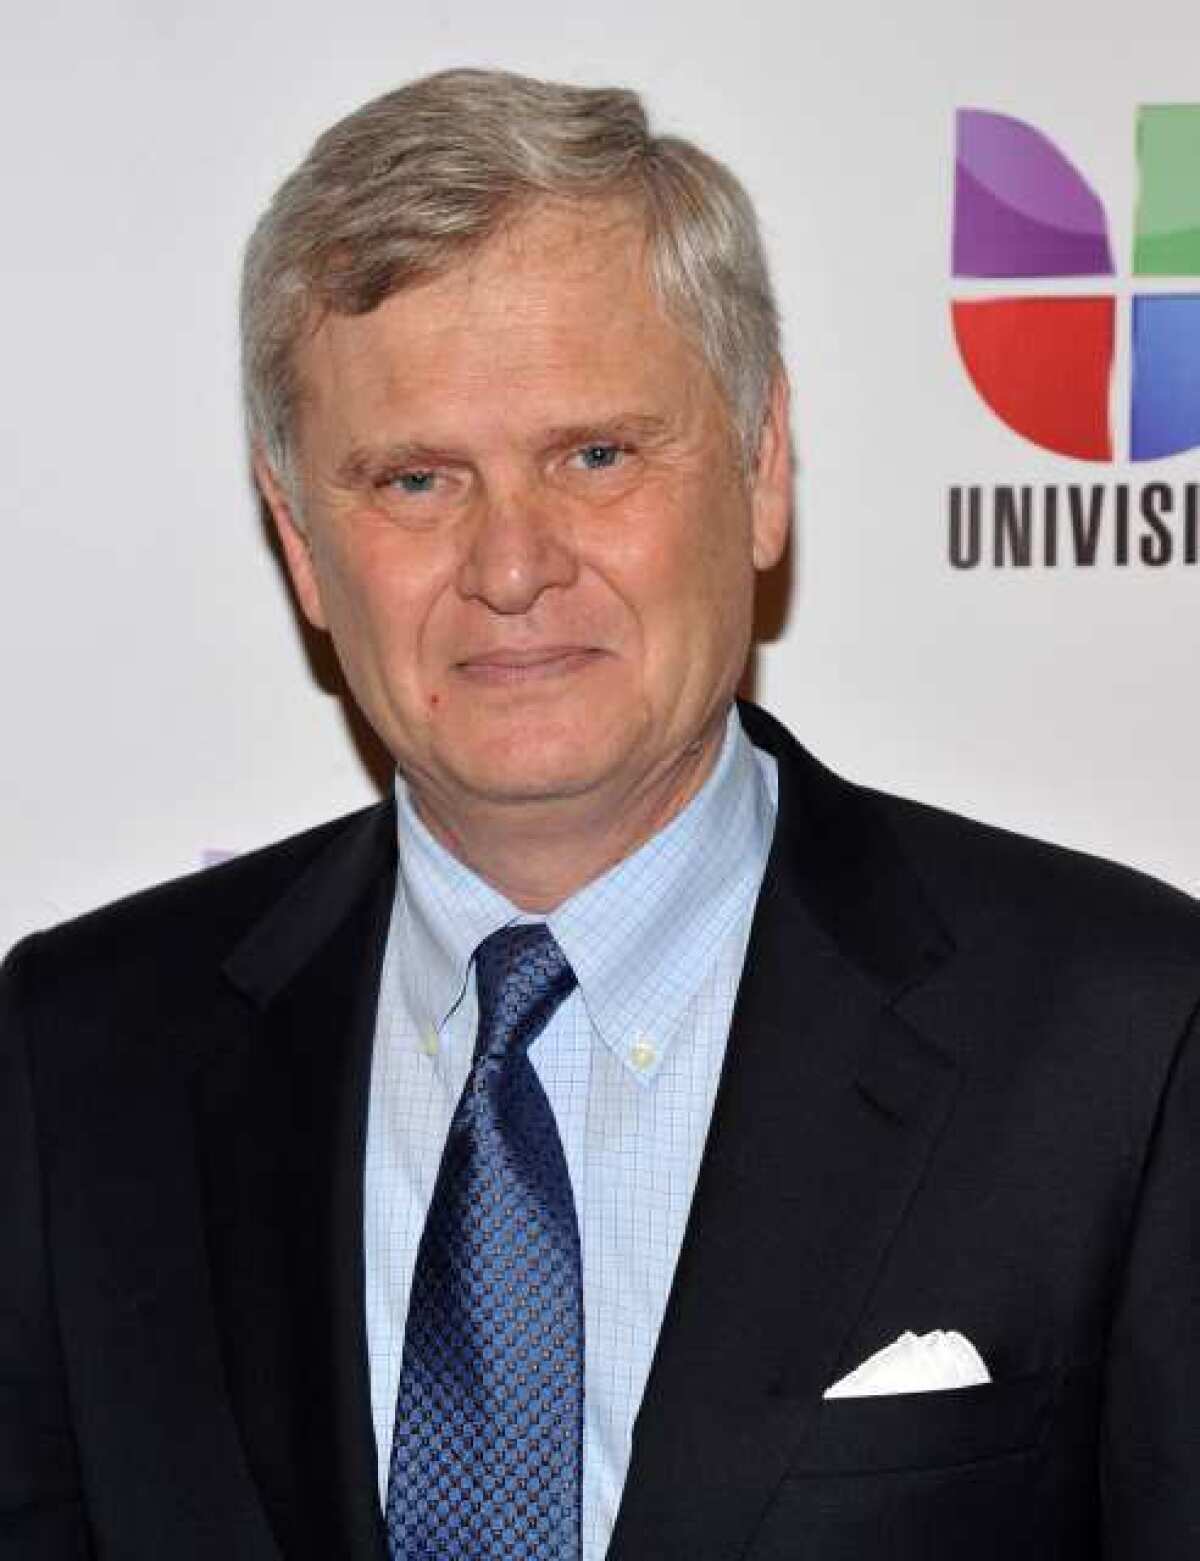 Univision Chief Executive Randy Falco